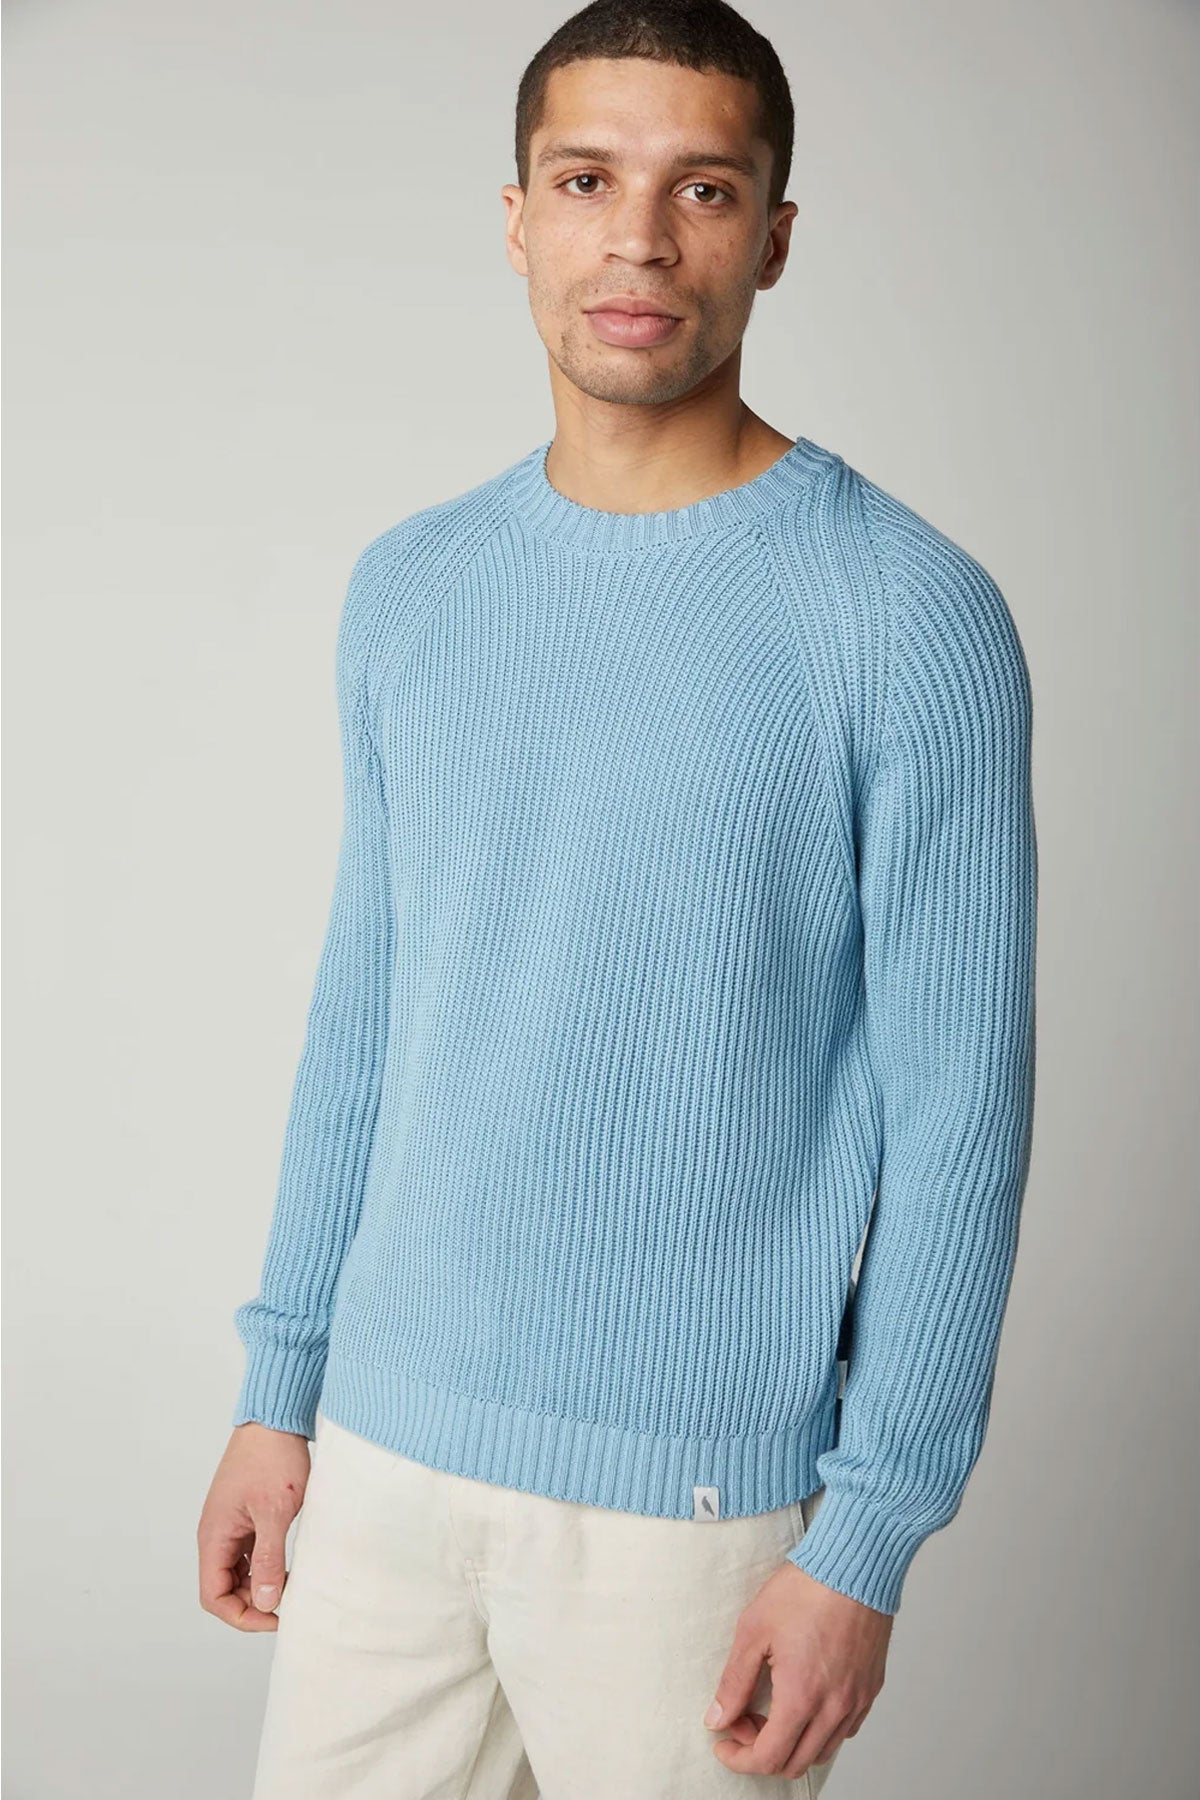 Peregrine - Harry Cotton Sweater in Seafoam